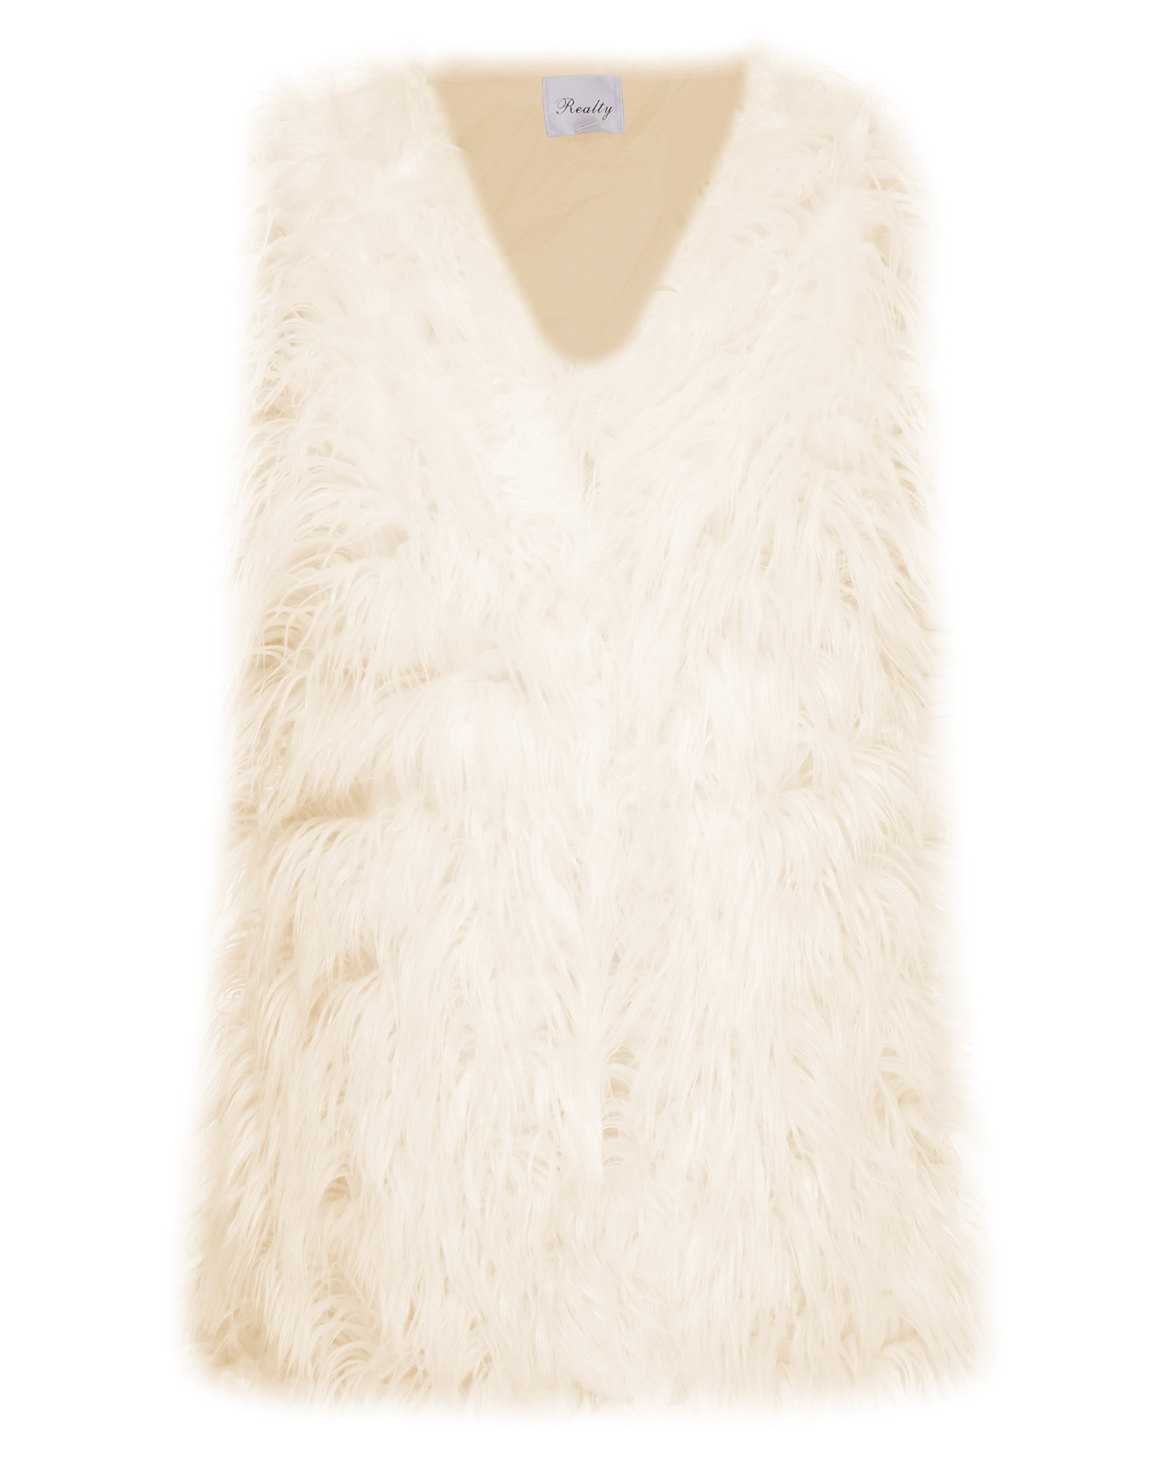 Realty Fur Gilet Cream | Zando